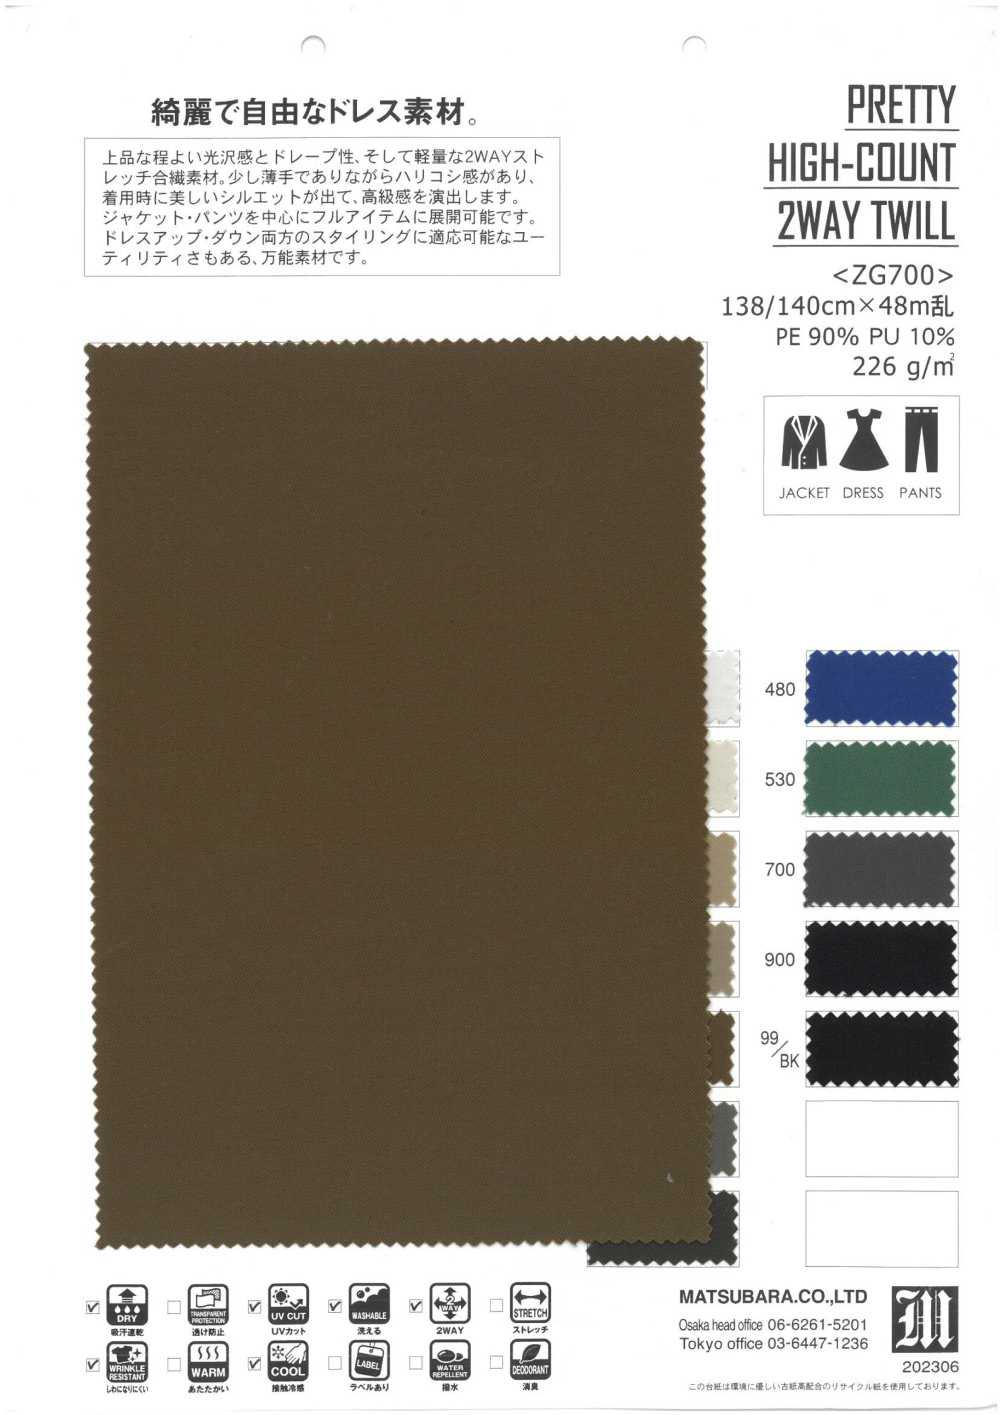 ZG700 SARJA BONITA DE ALTA CONTAGEM DE 2 VIAS[Têxtil / Tecido] Matsubara